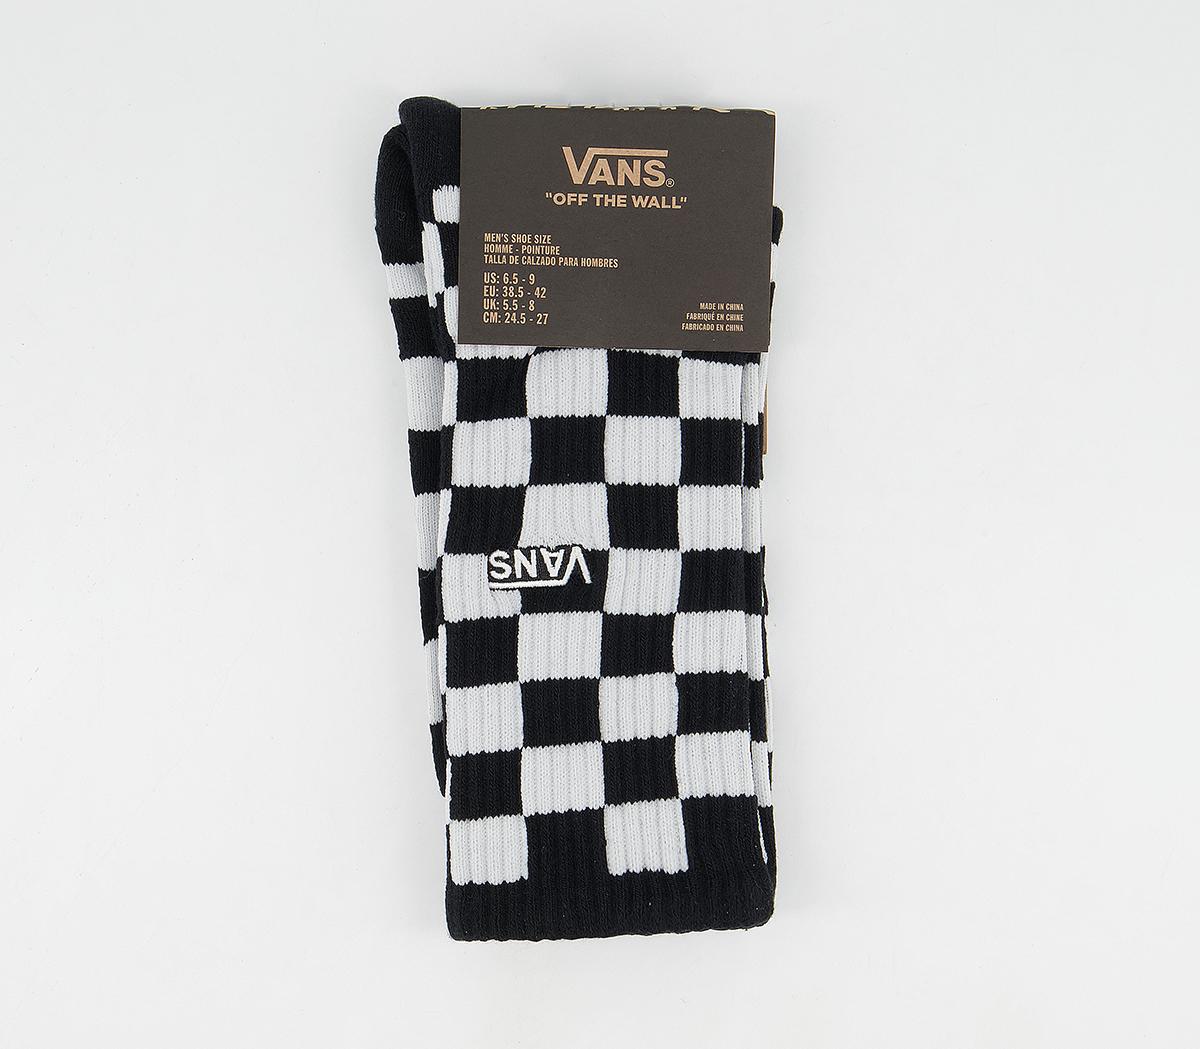 Vans Checkerboard Crew 2 Sock 1 Pack Black White Check - Socks